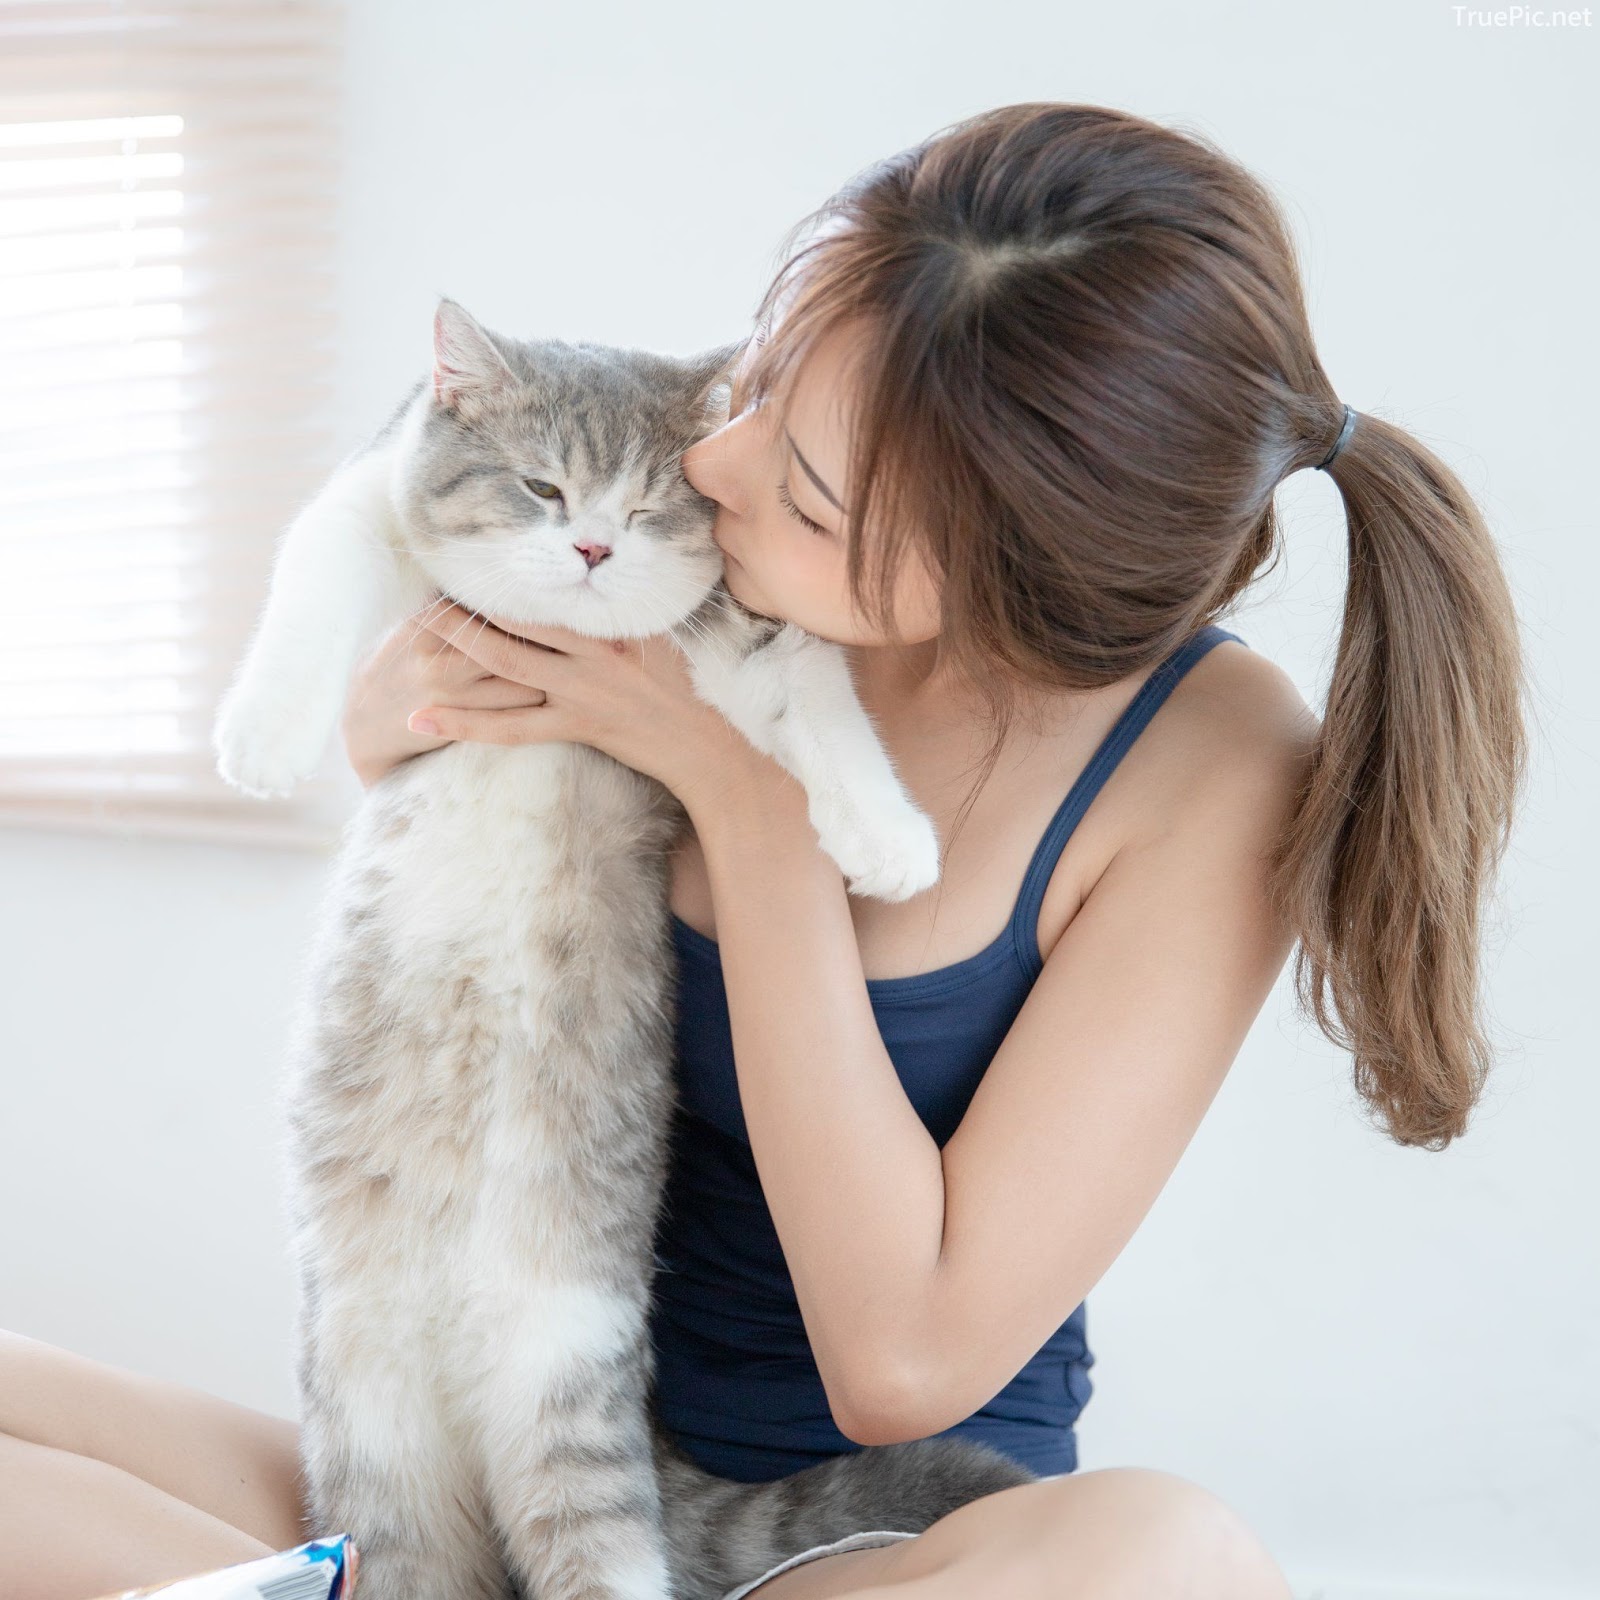 Thailand model - Thanyarat Charoenpornkittada - Stay at home with beautiul cat - TruePic.net - Picture 11